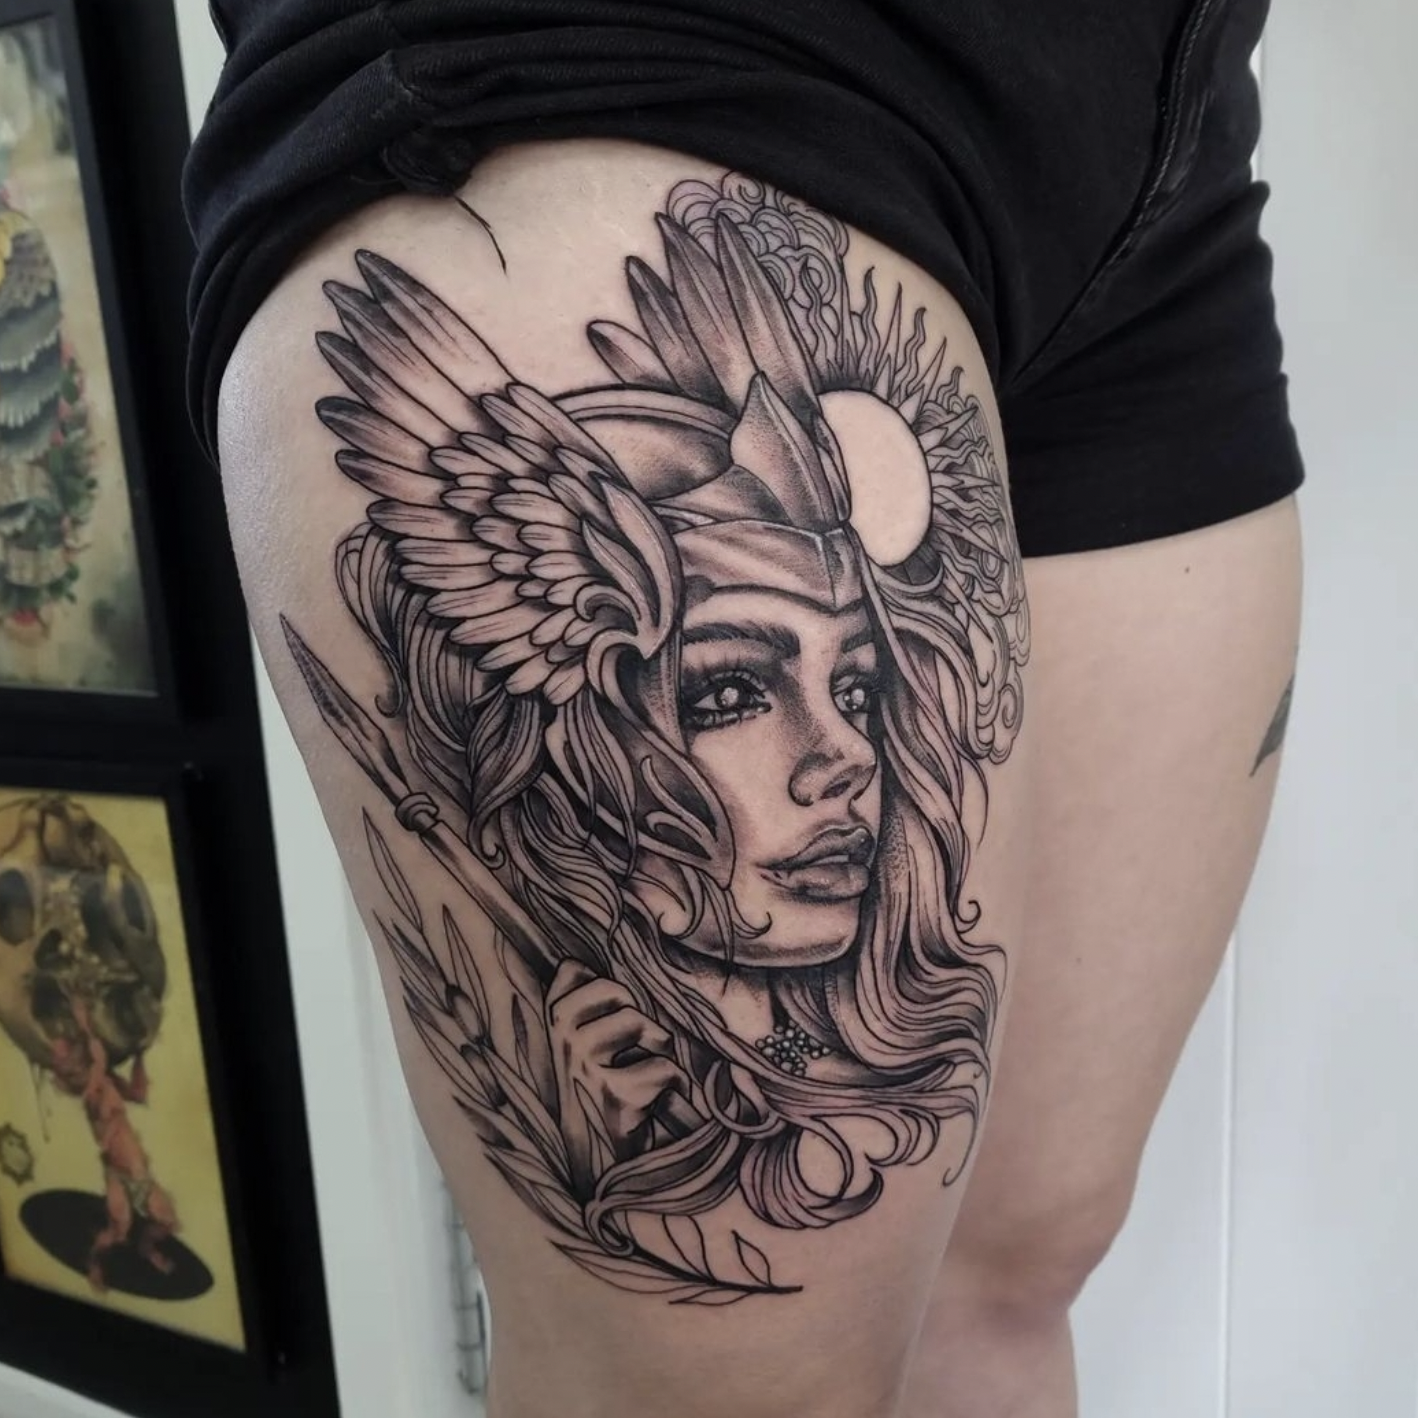 Lauren Dev Tattoos